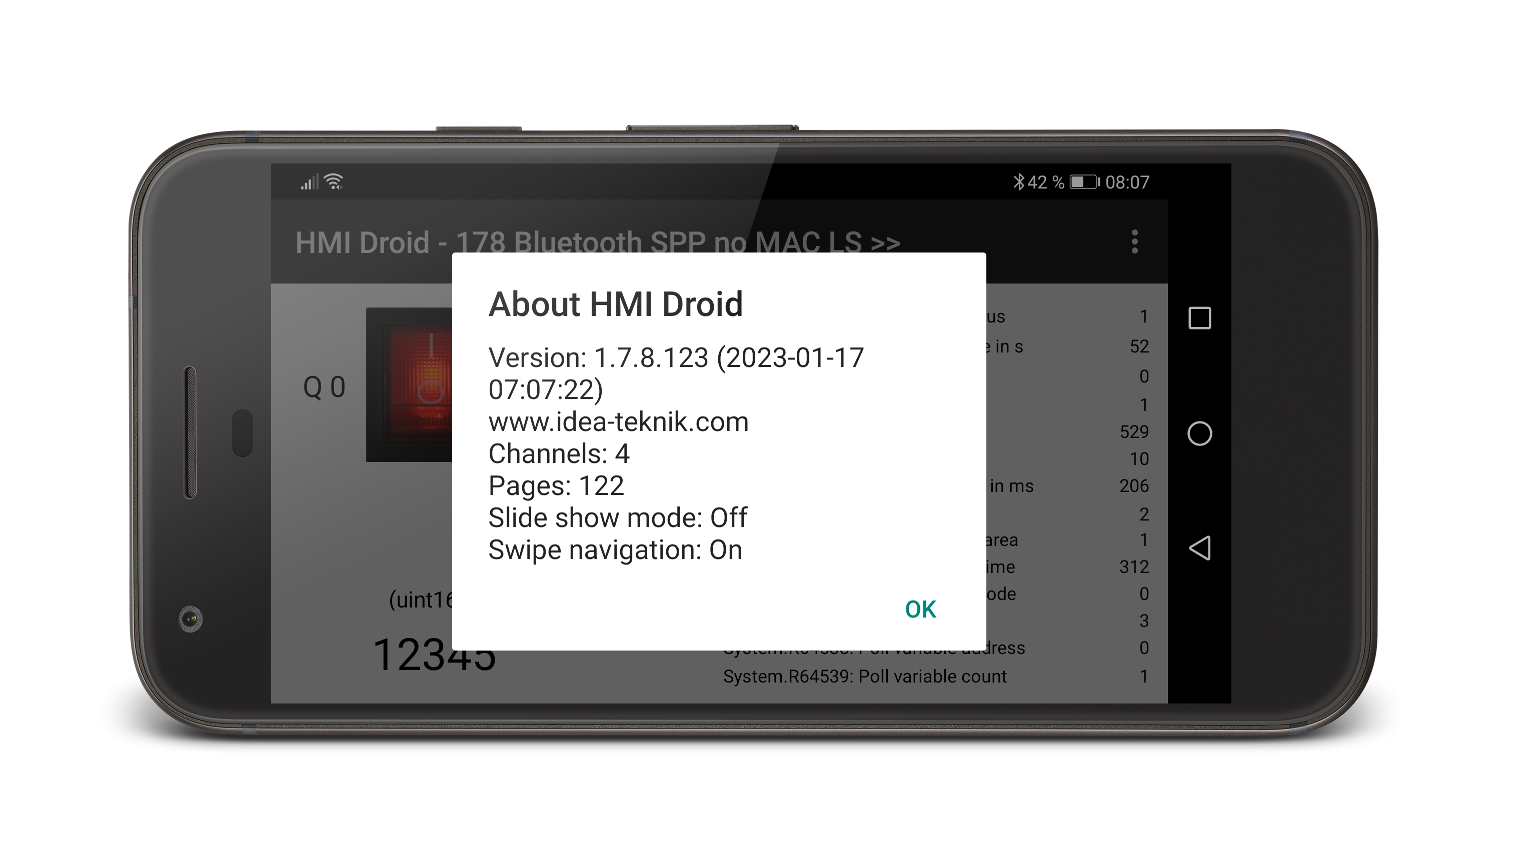 HMI Droid 1.7.8.123